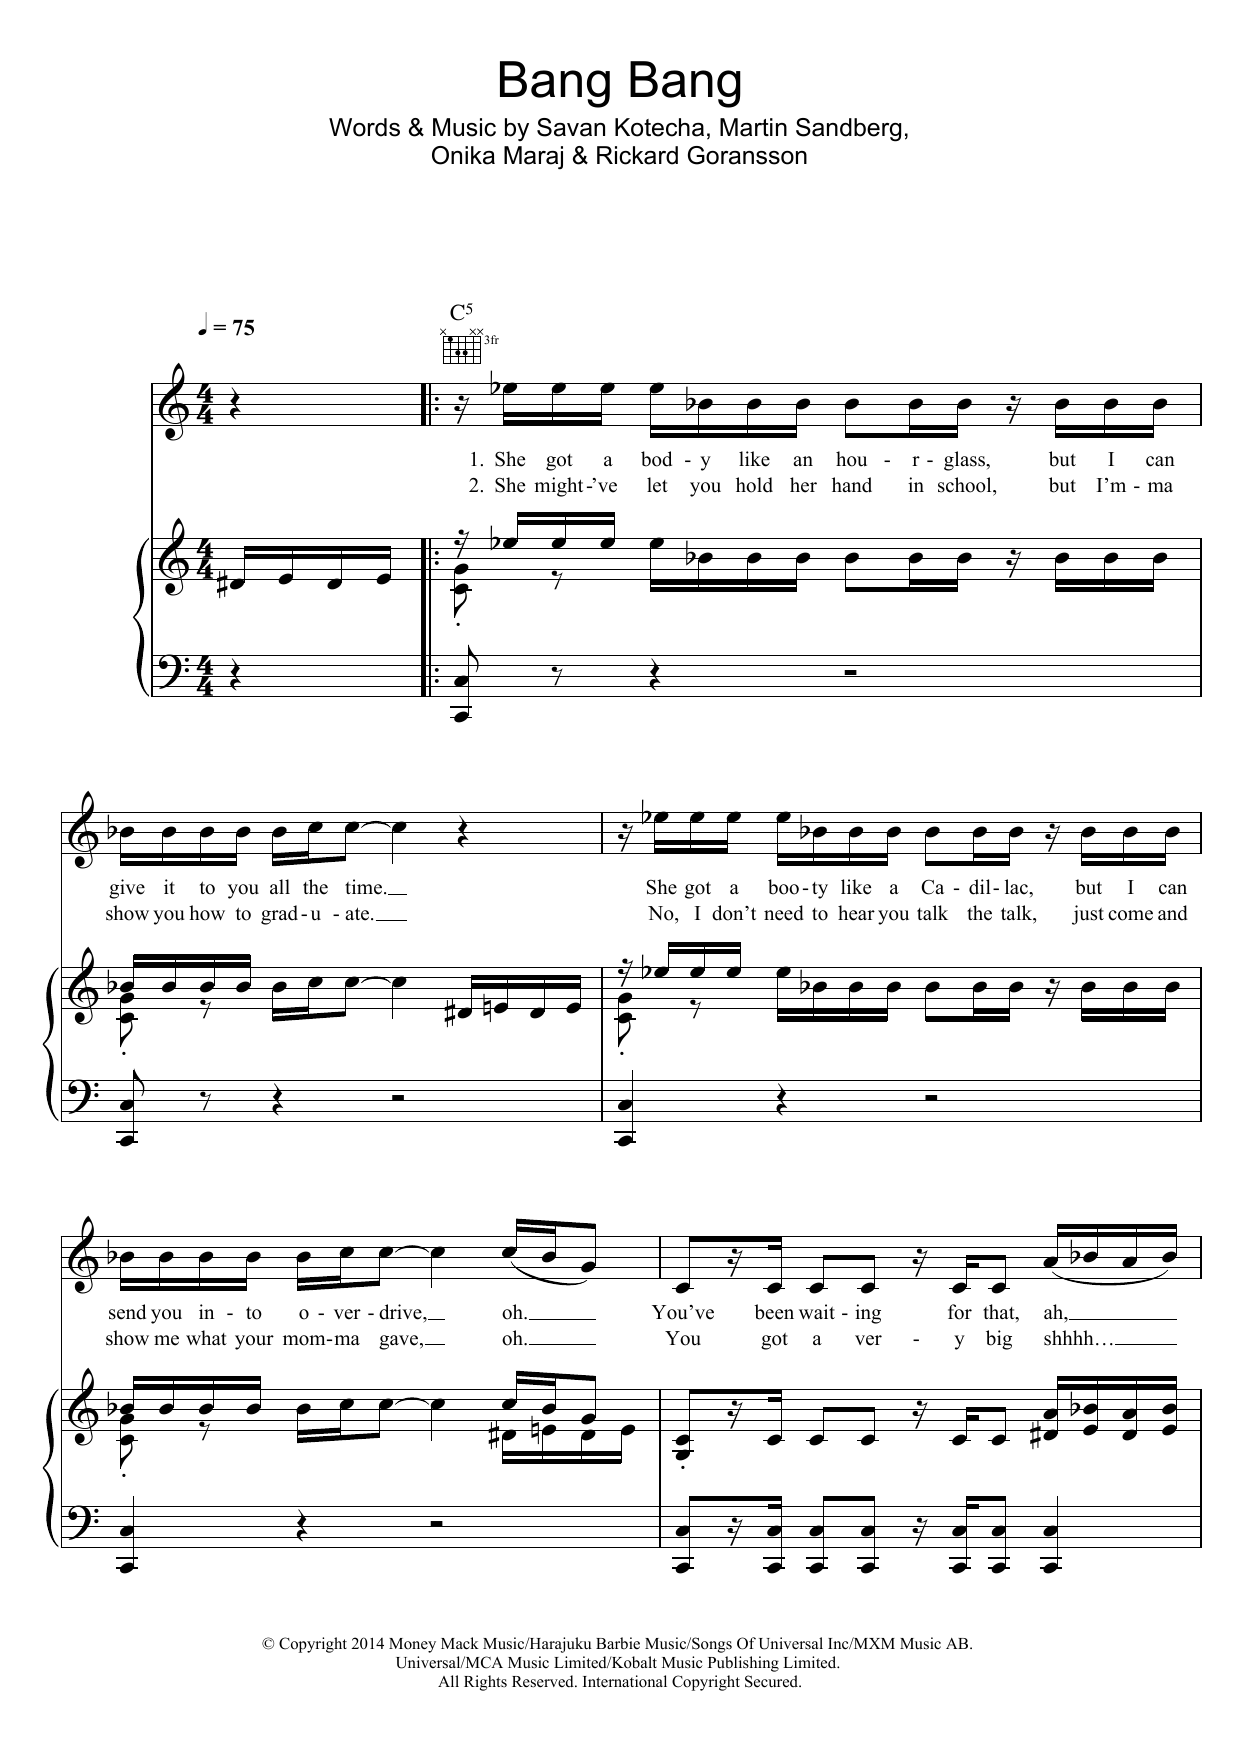 Download Jessie J, Ariana Grande & Nicki Minaj Bang Bang Sheet Music and learn how to play Piano, Vocal & Guitar (Right-Hand Melody) PDF digital score in minutes